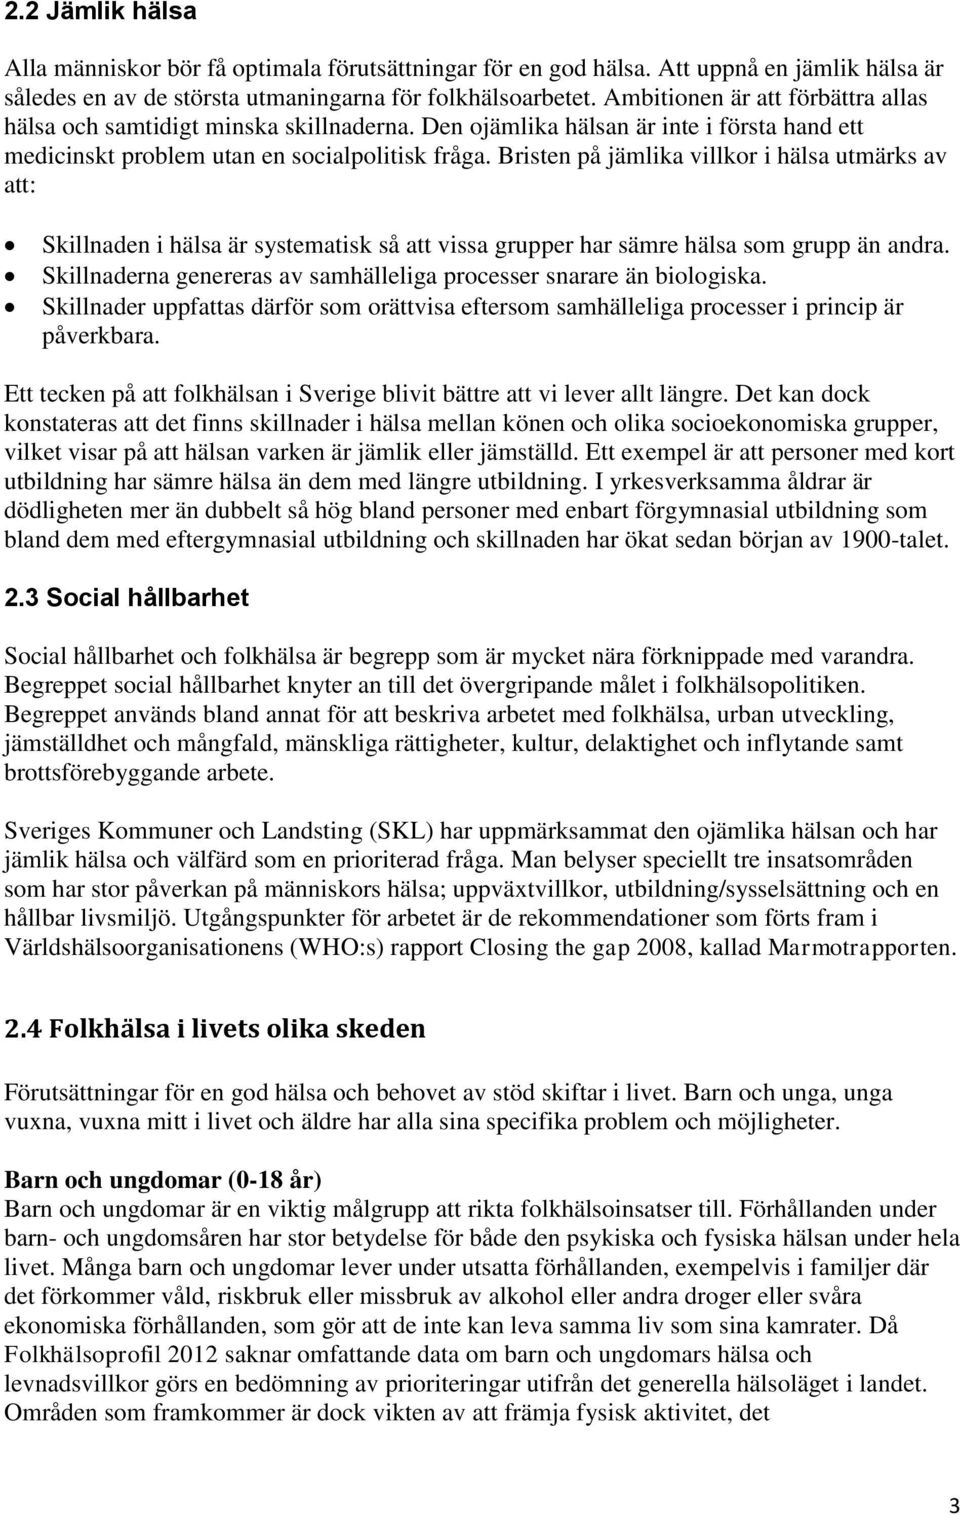 Folkhälsopolicy Ronneby kommun - PDF Free Download